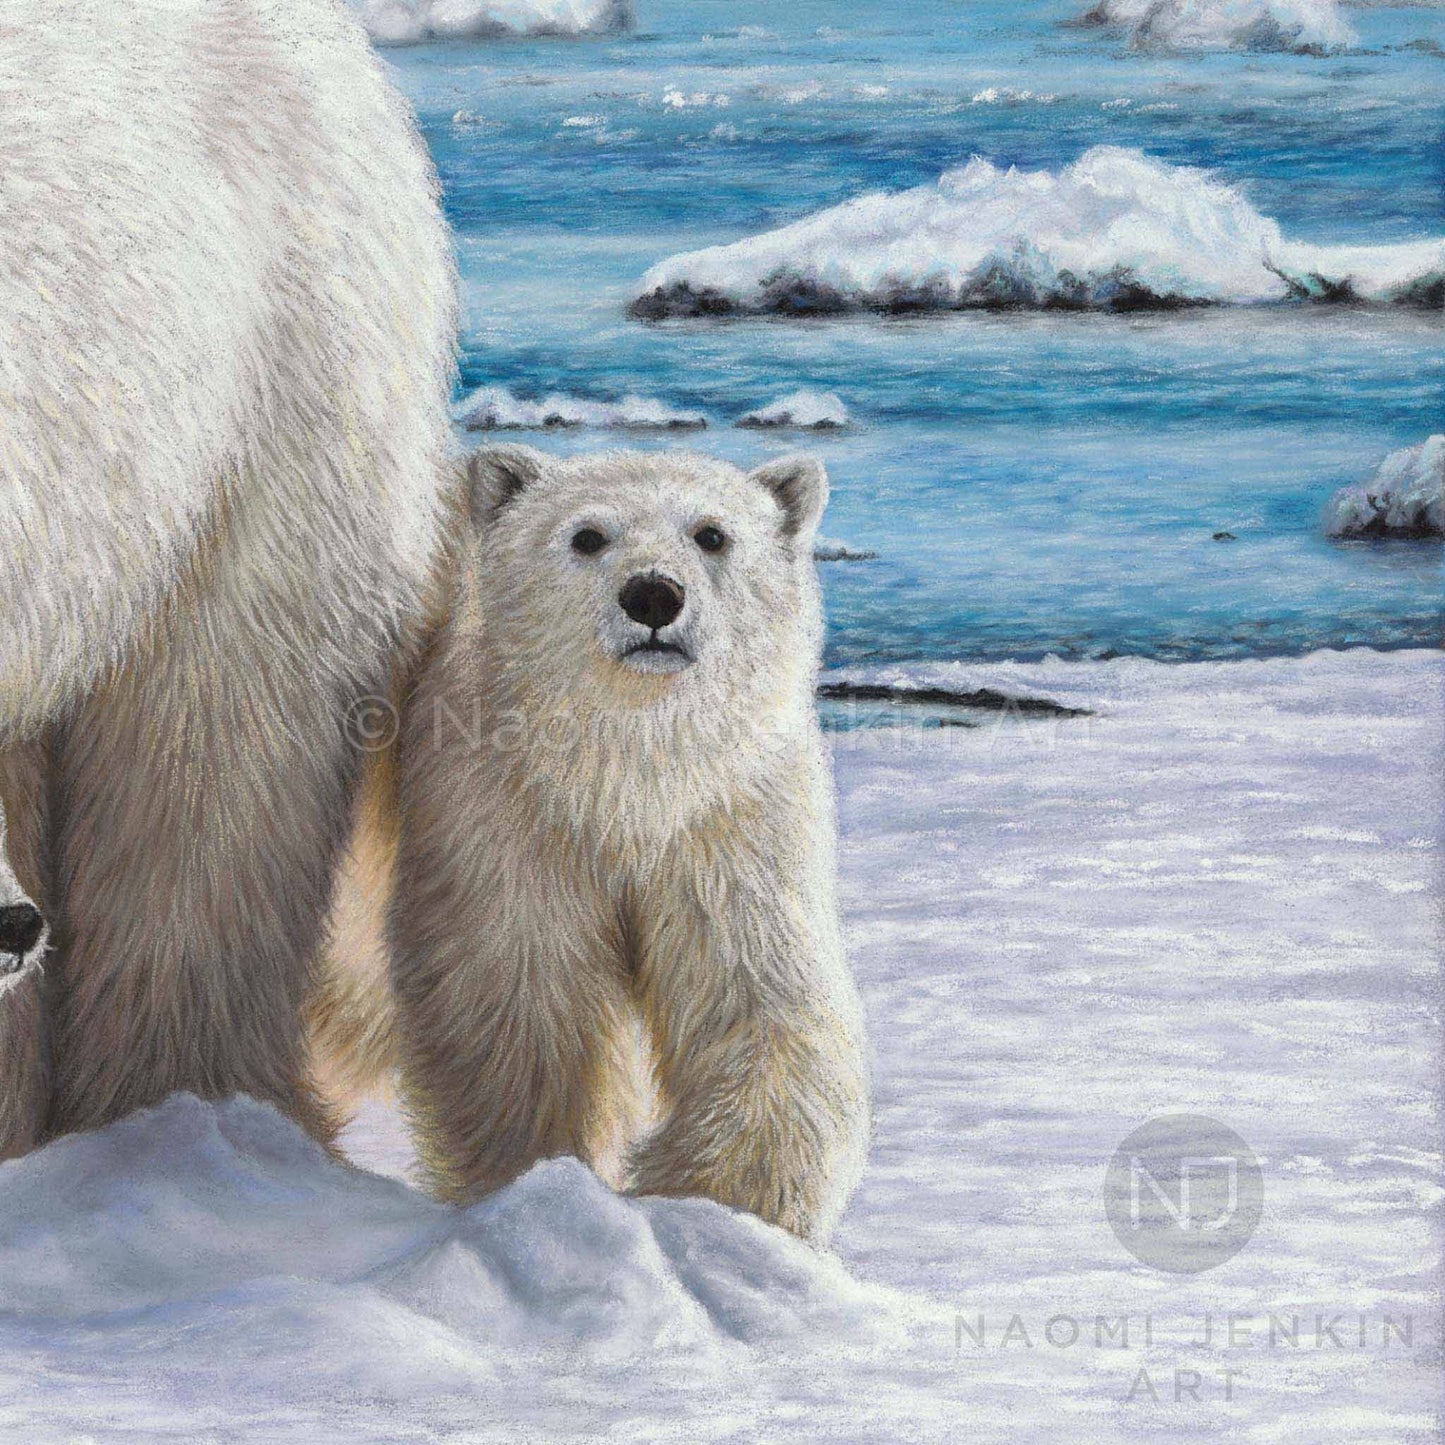 Polar bear cub drawing from the original 'On Thin Ice' polar bear painting by Naomi Jenkin